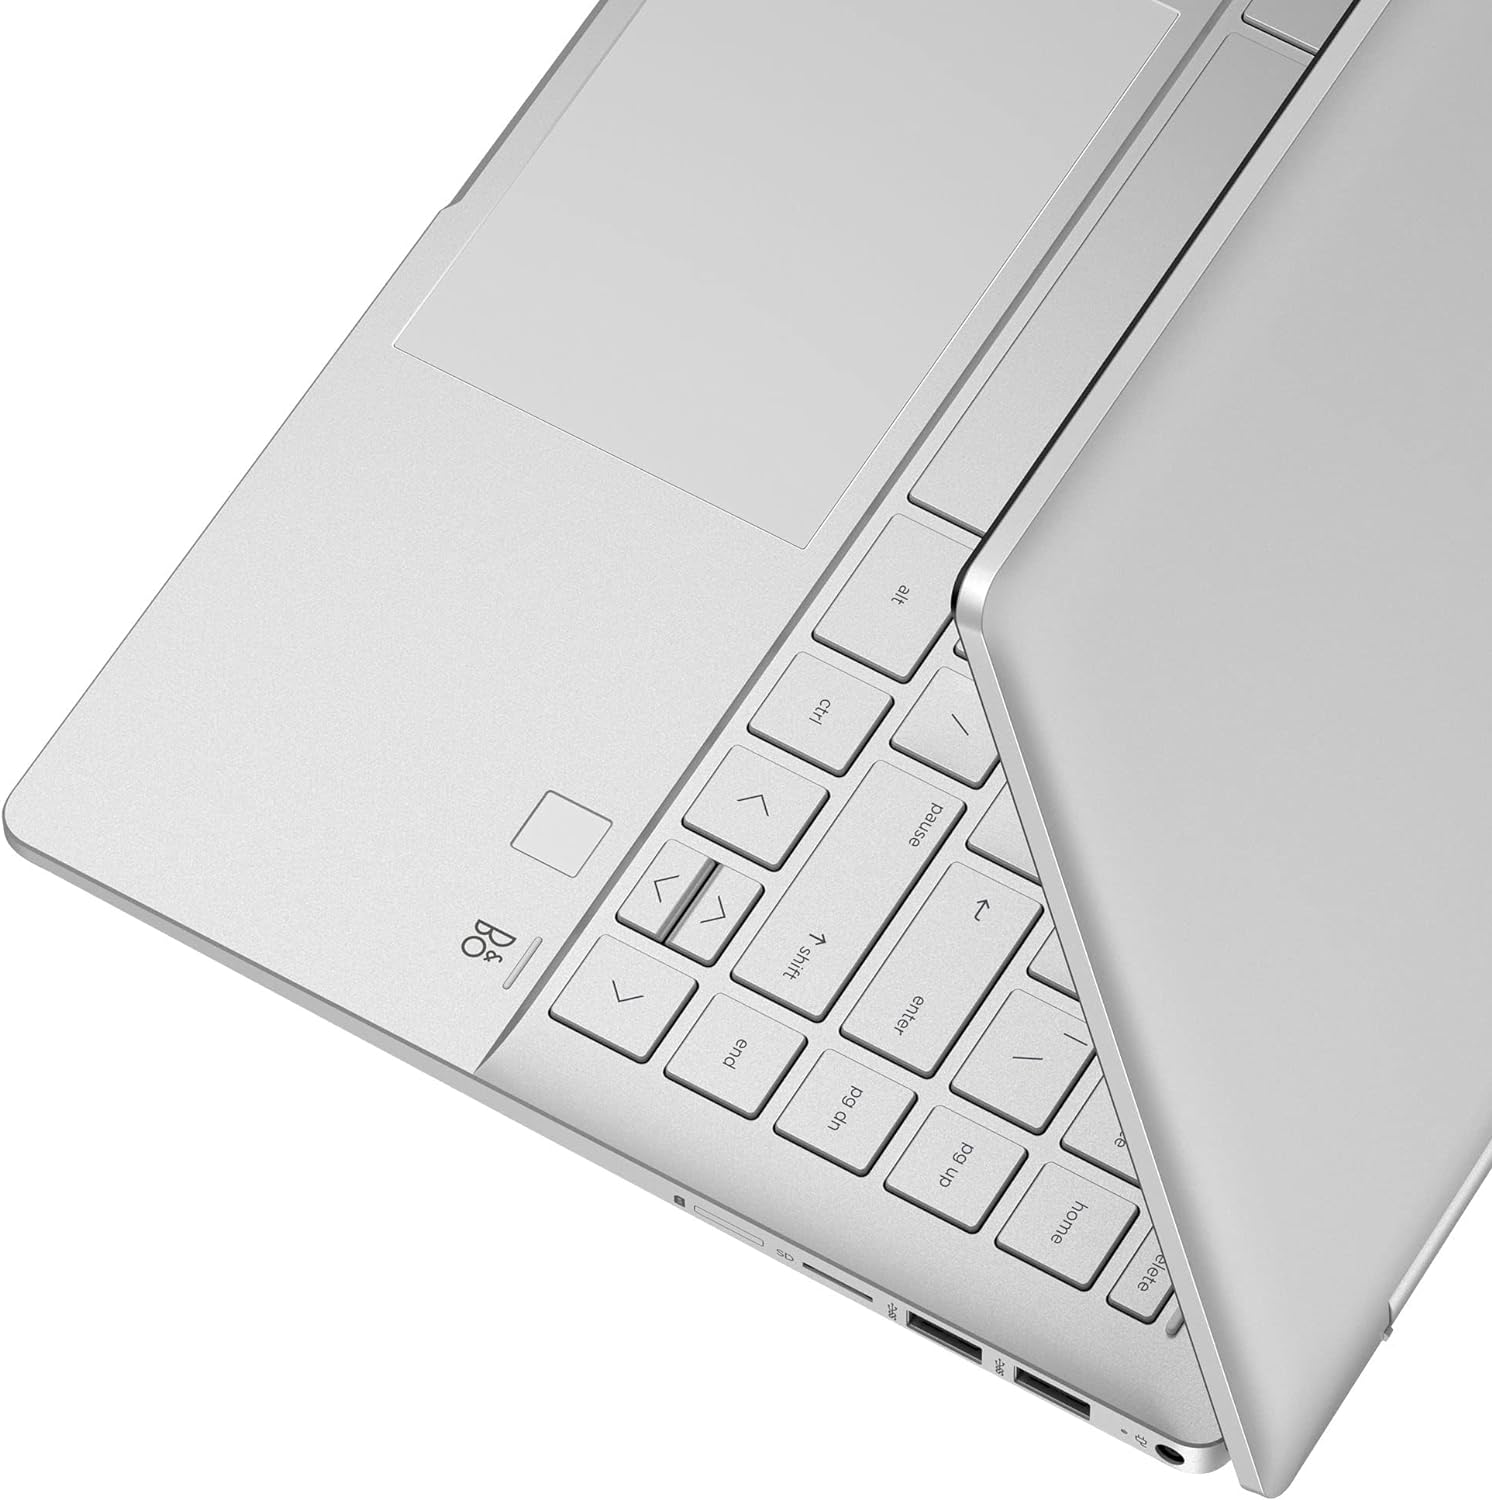 HP Pavilion x360 14 2-in-1 Laptop - Core i5, 8GB RAM, 512GB SSD, Silver 0196548954551